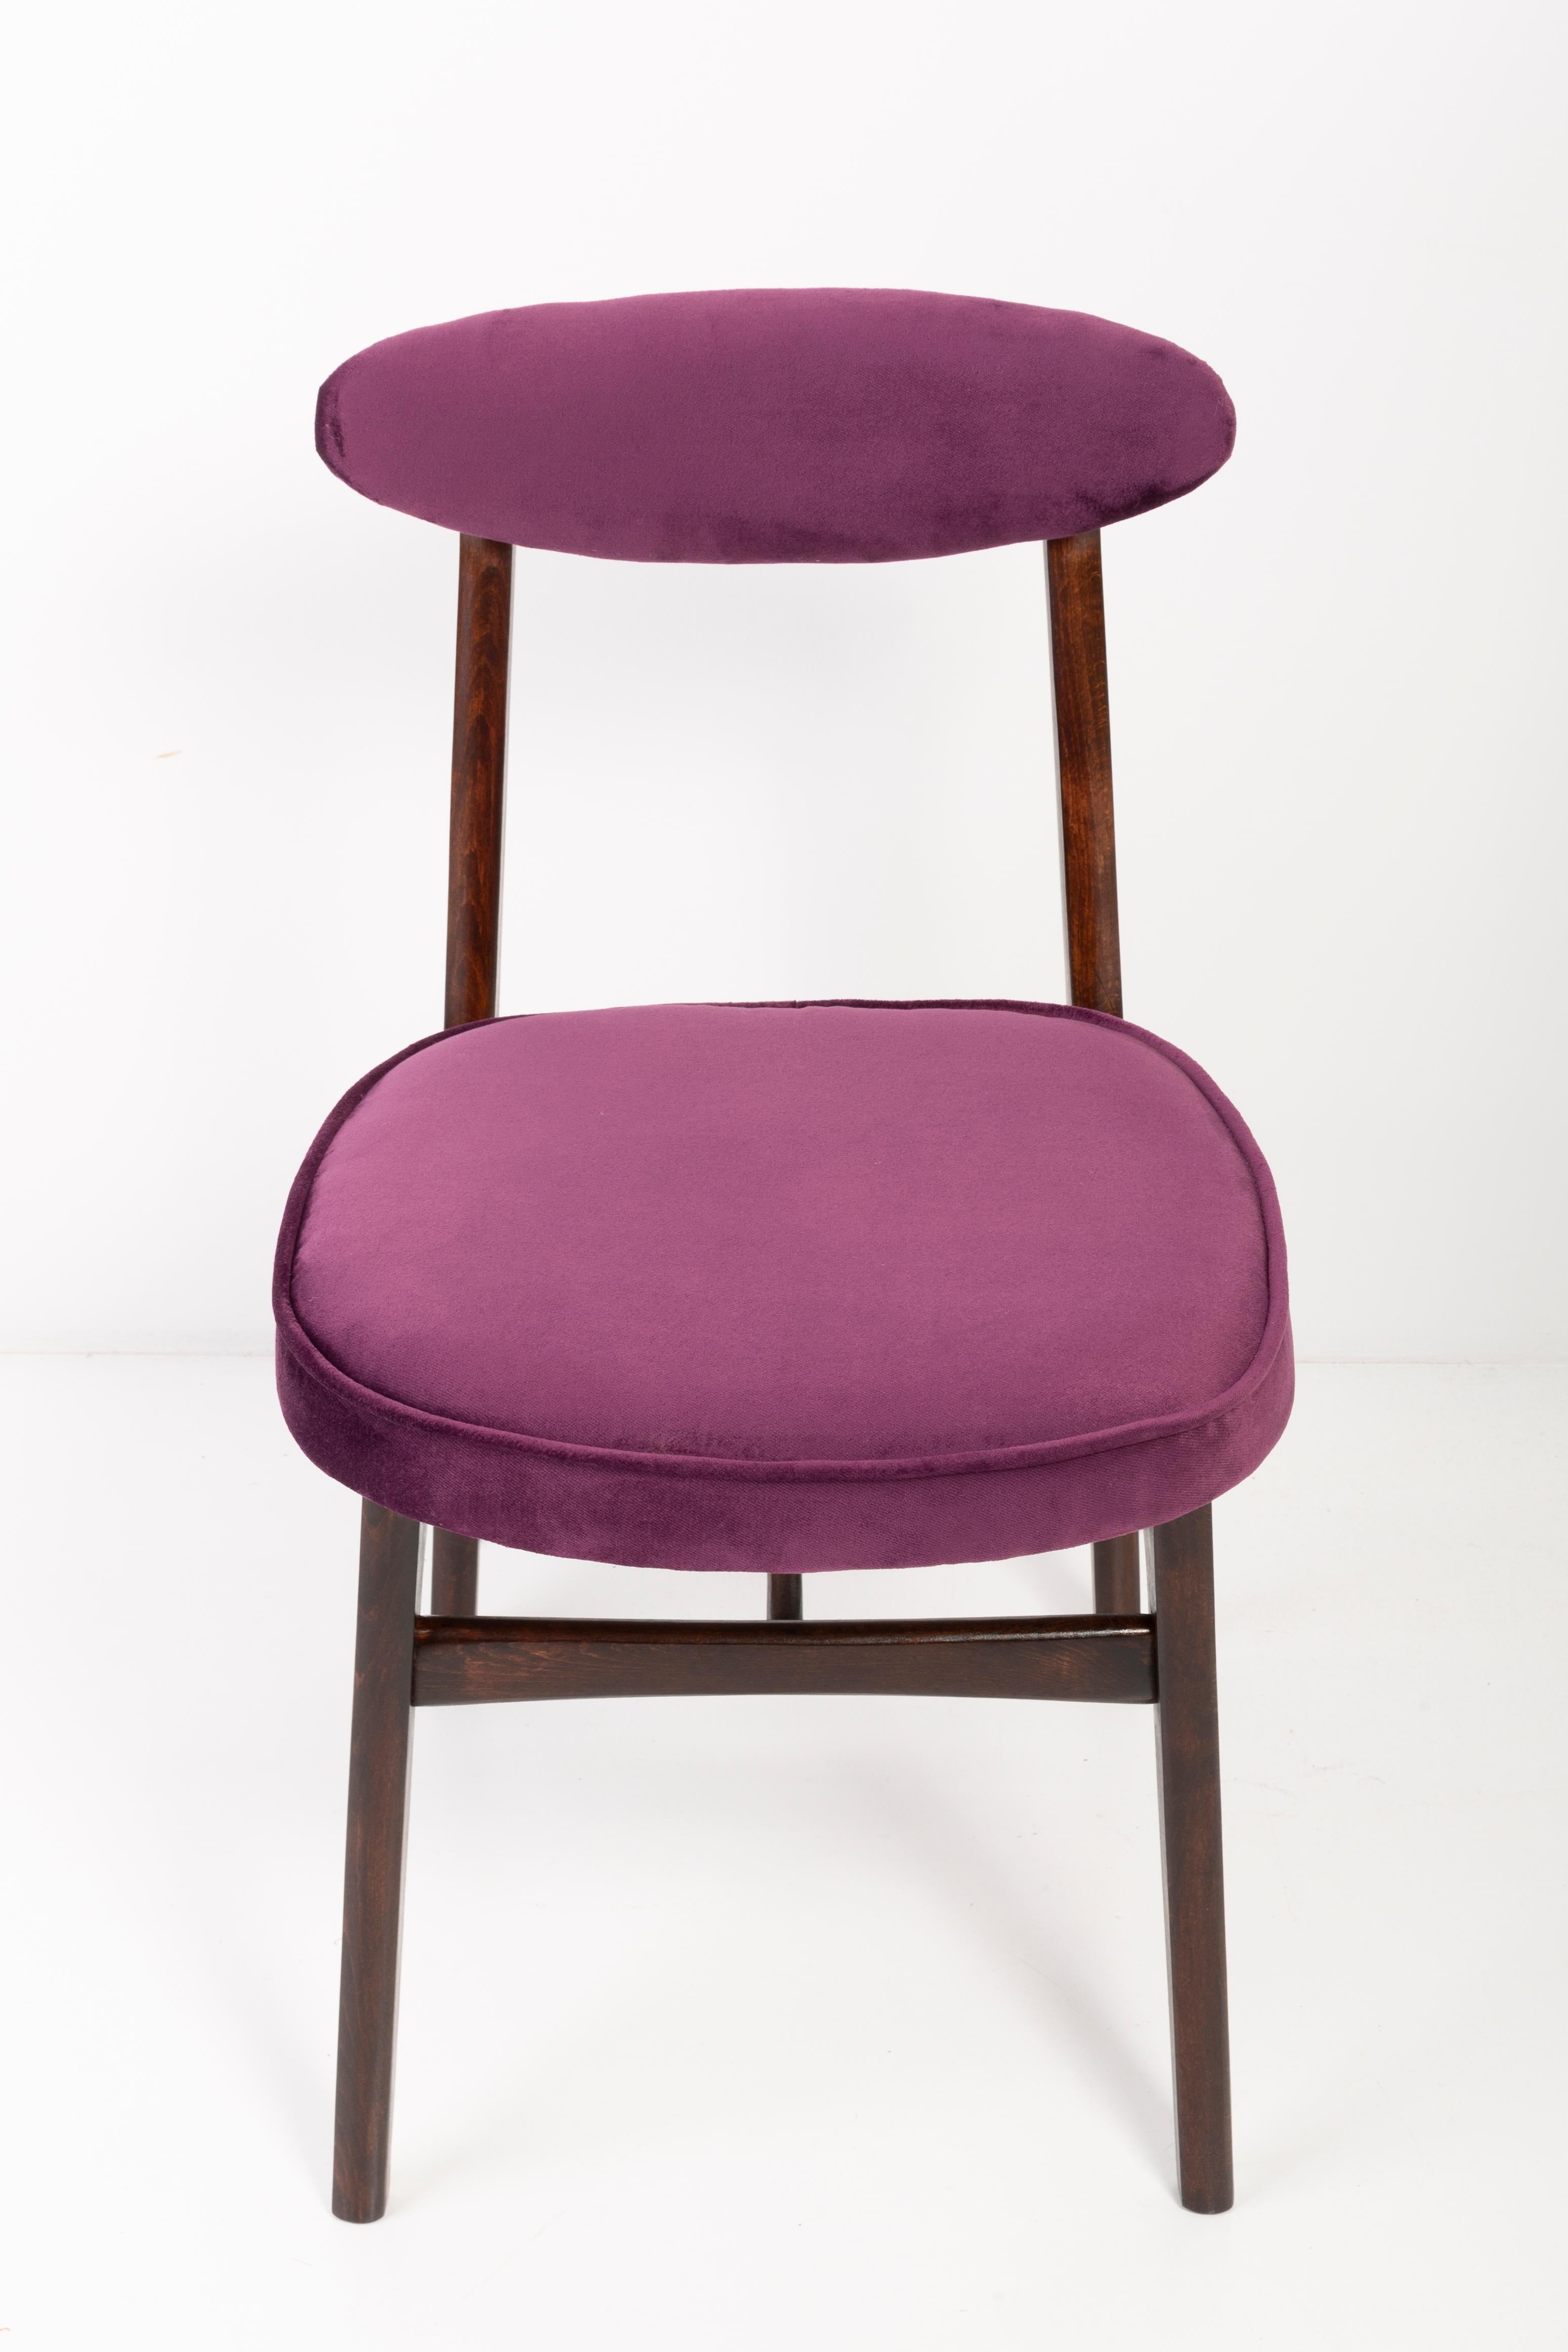 Twelve 20th Century Plum Violet Velvet Rajmund Halas Chairs, Europe, 1960s For Sale 1